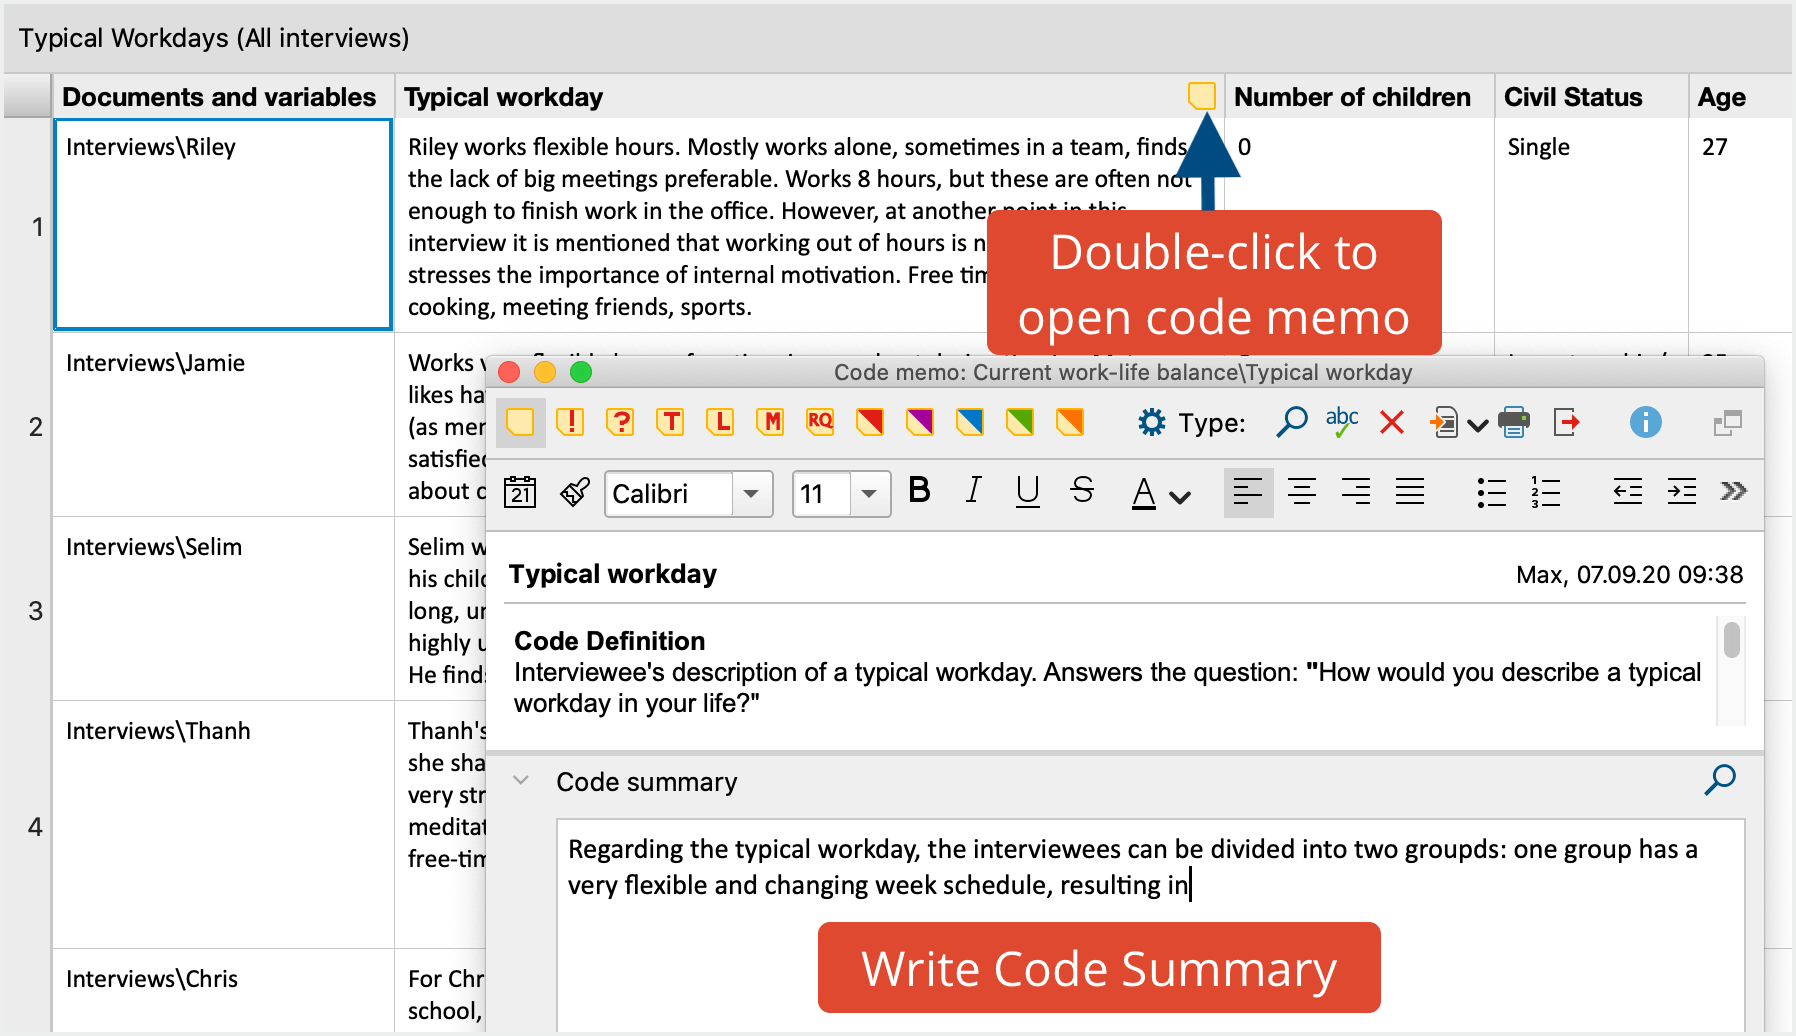 Writing Code Summaries in the code memo